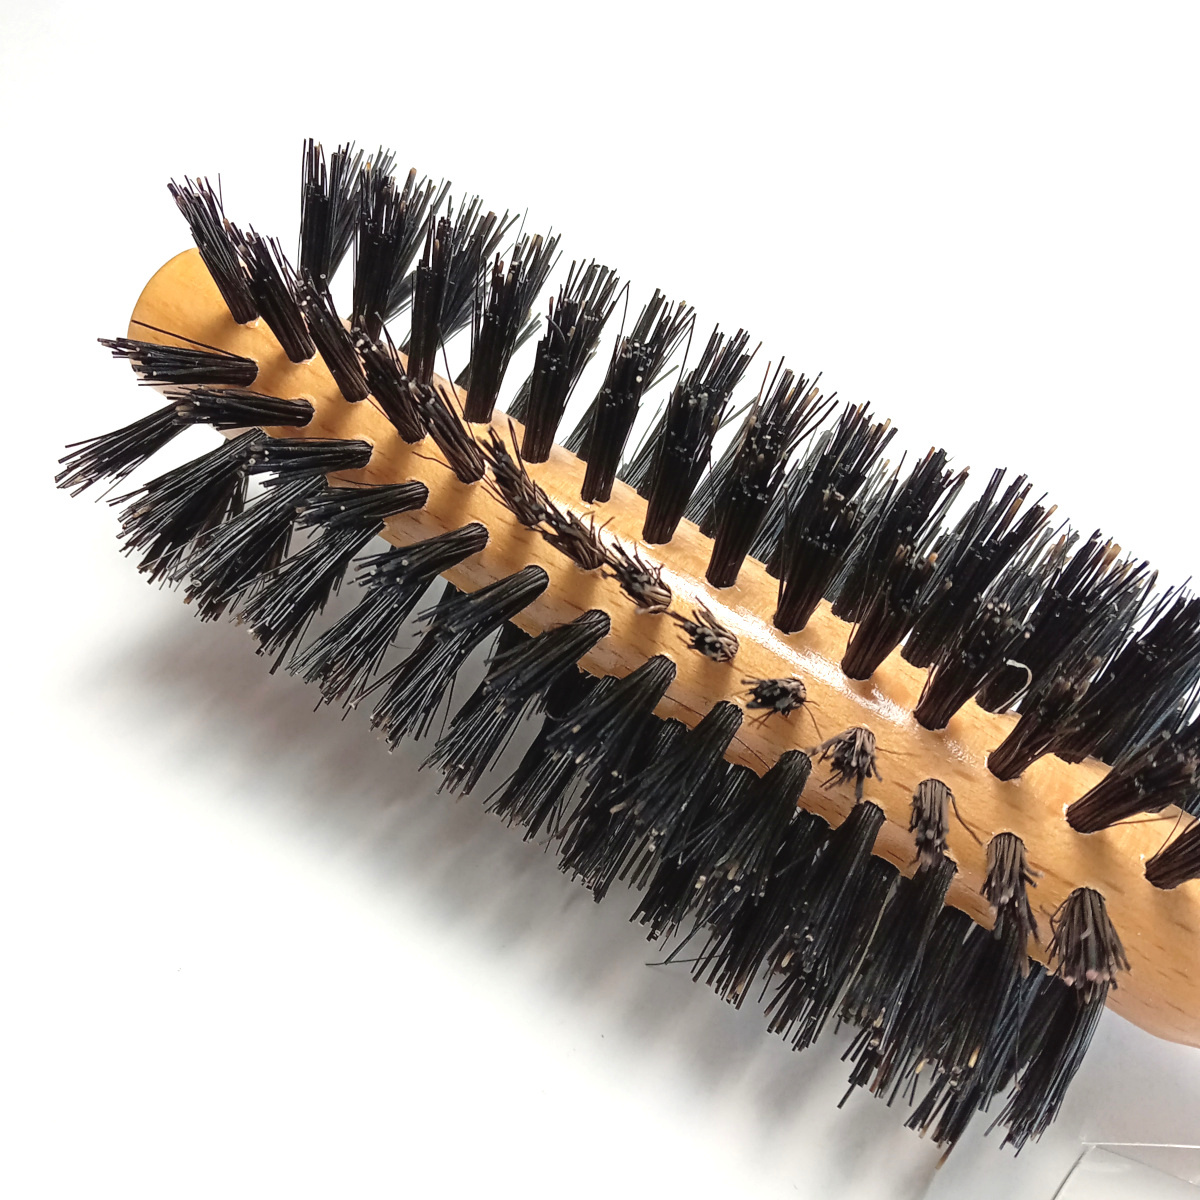 [keb1] new goods KENT kent lady's hair brush LBR1 roll brush Britain .. purveyor styling / blow / dry top class pig wool natural tree Sakura 